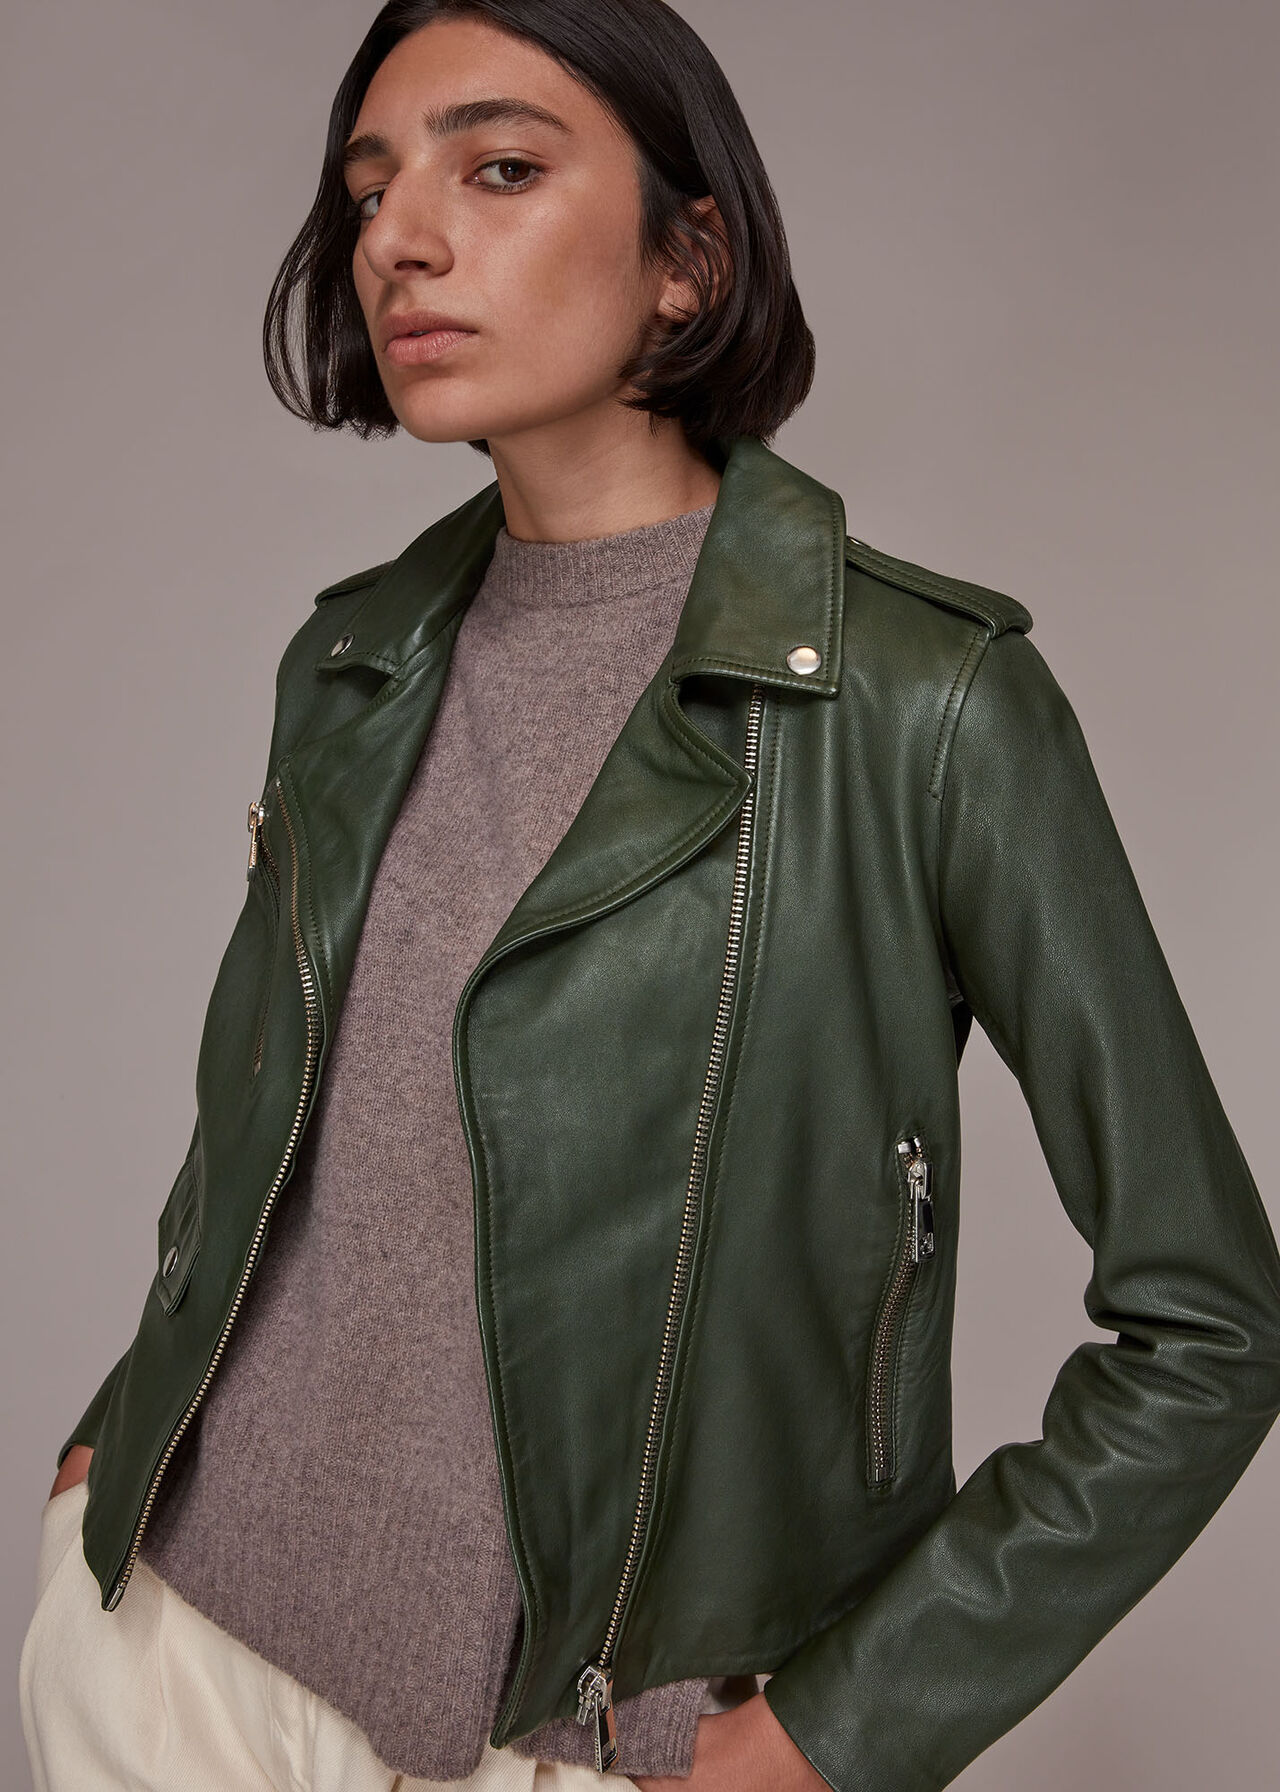 Designed leather jacket, Dark green jacket